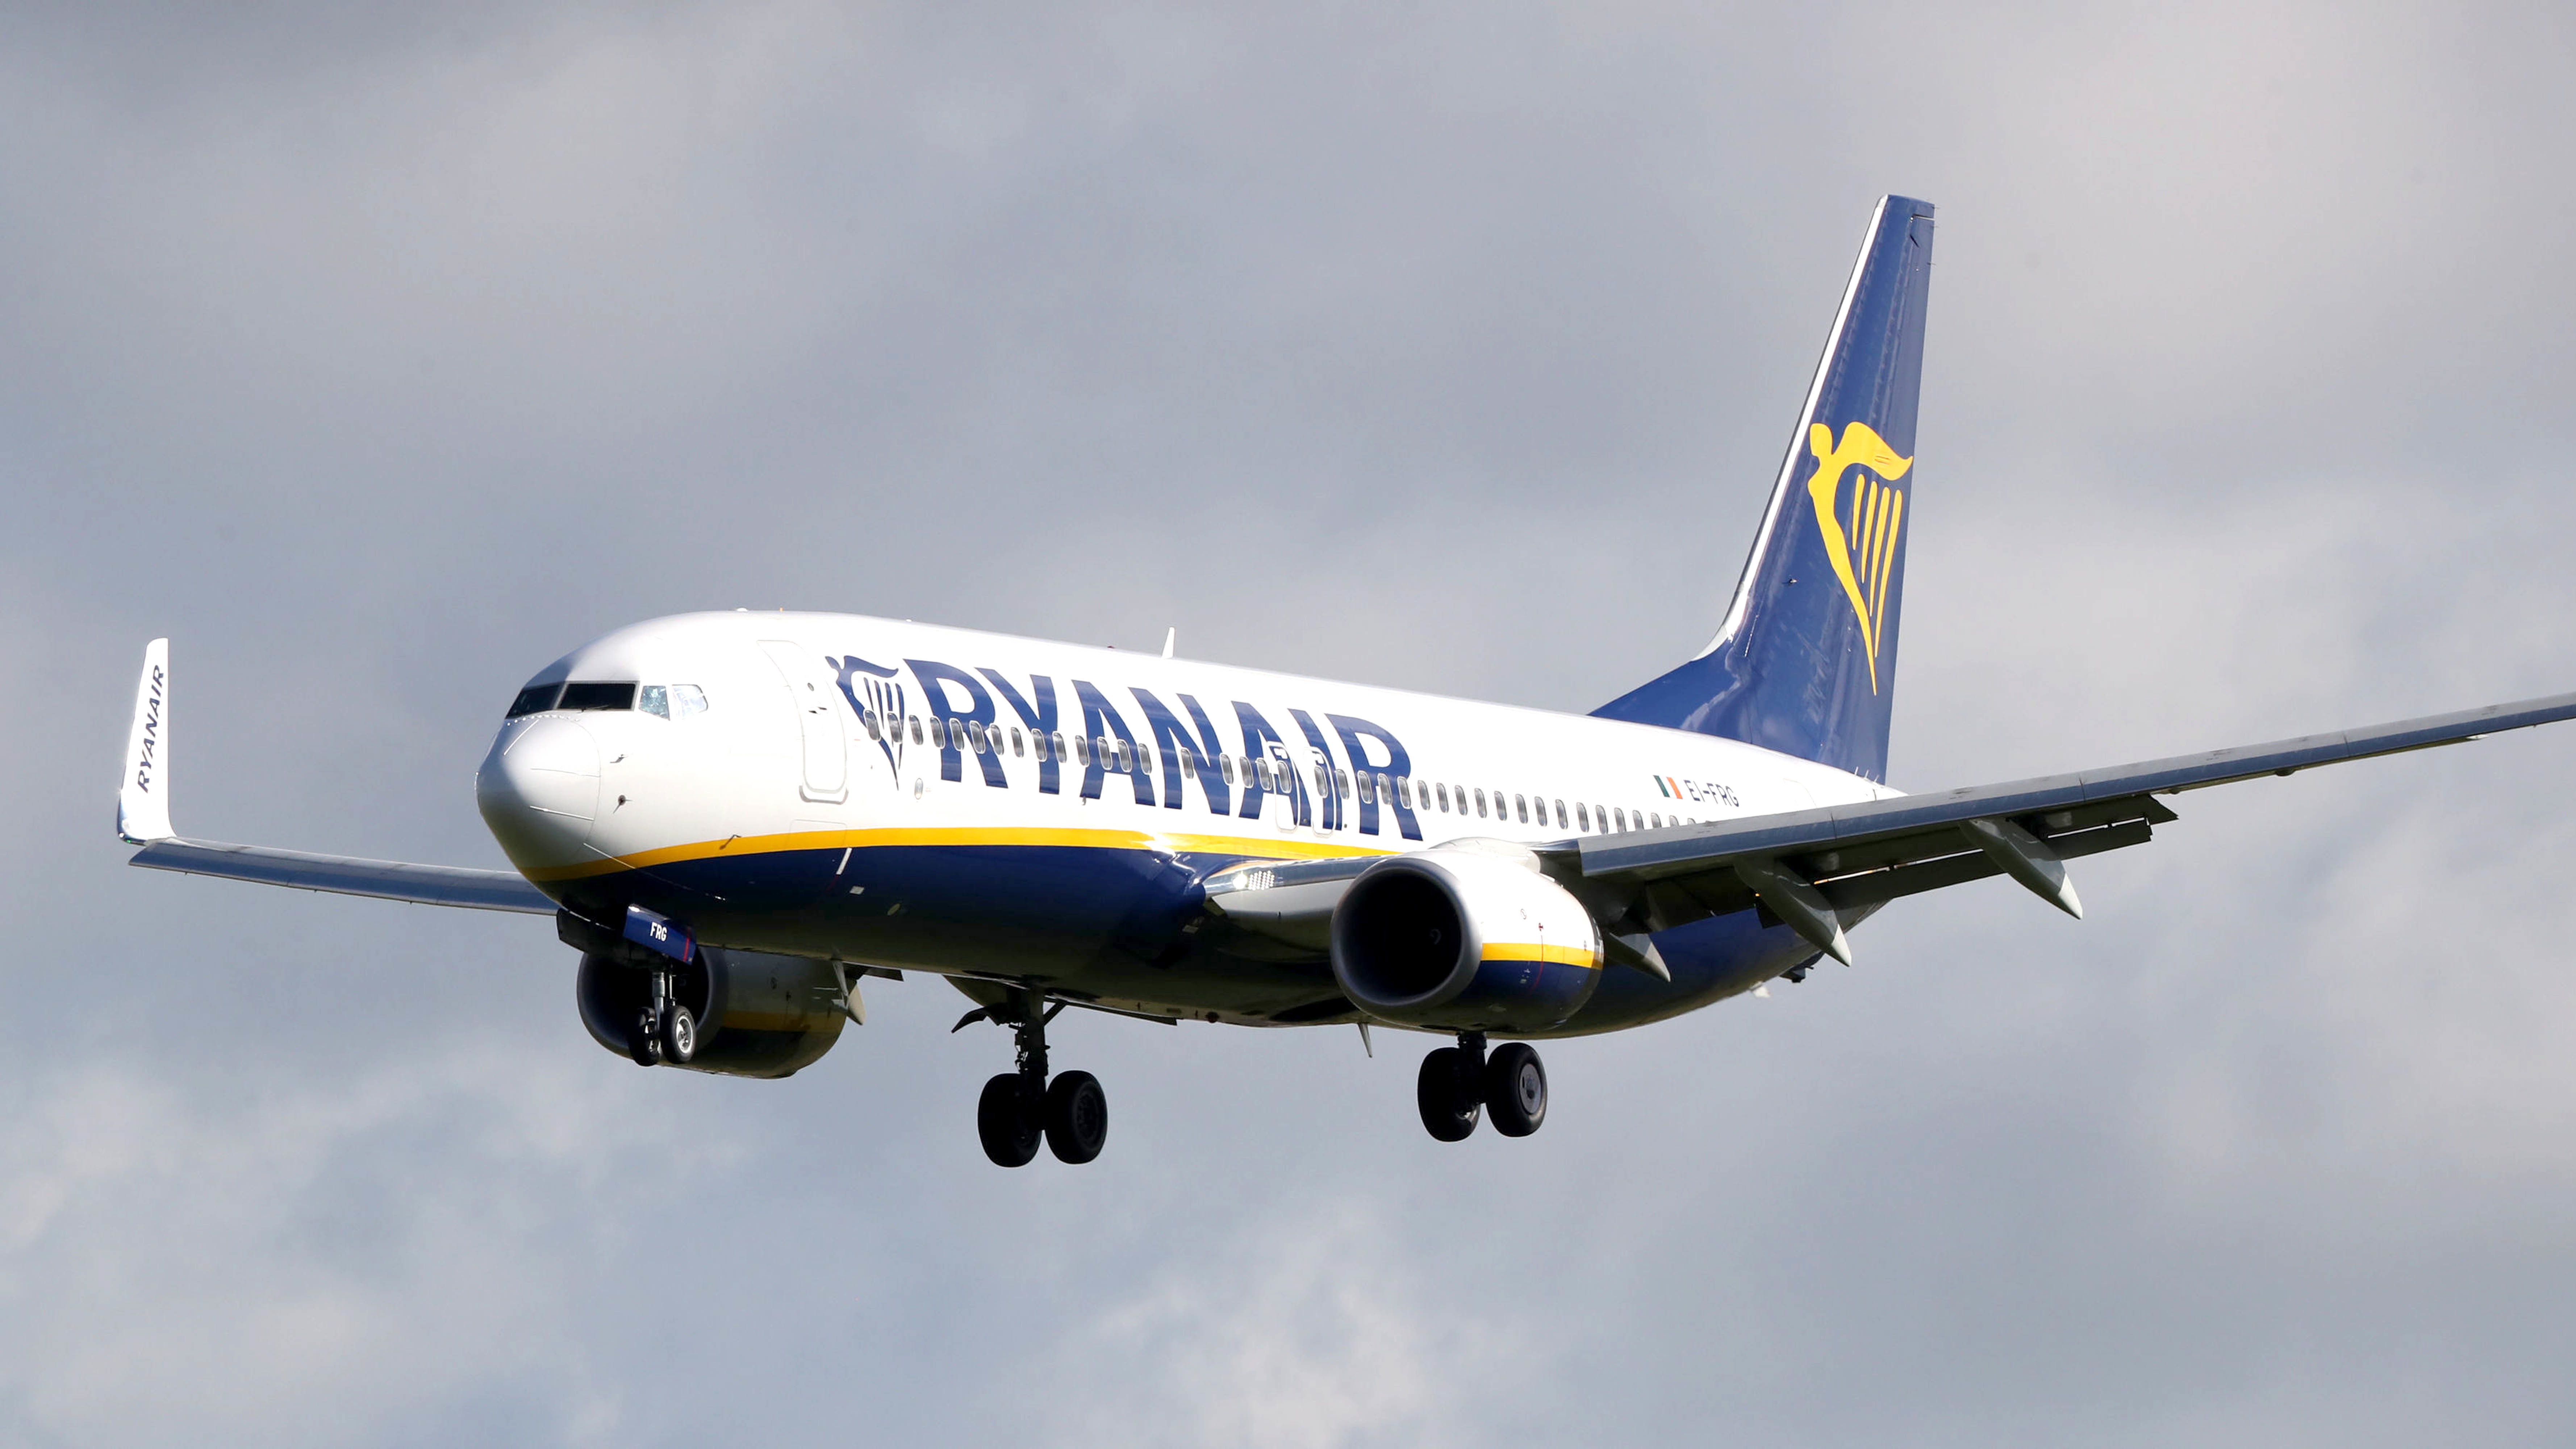 Police identify man filmed in racist rant on Ryanair flight